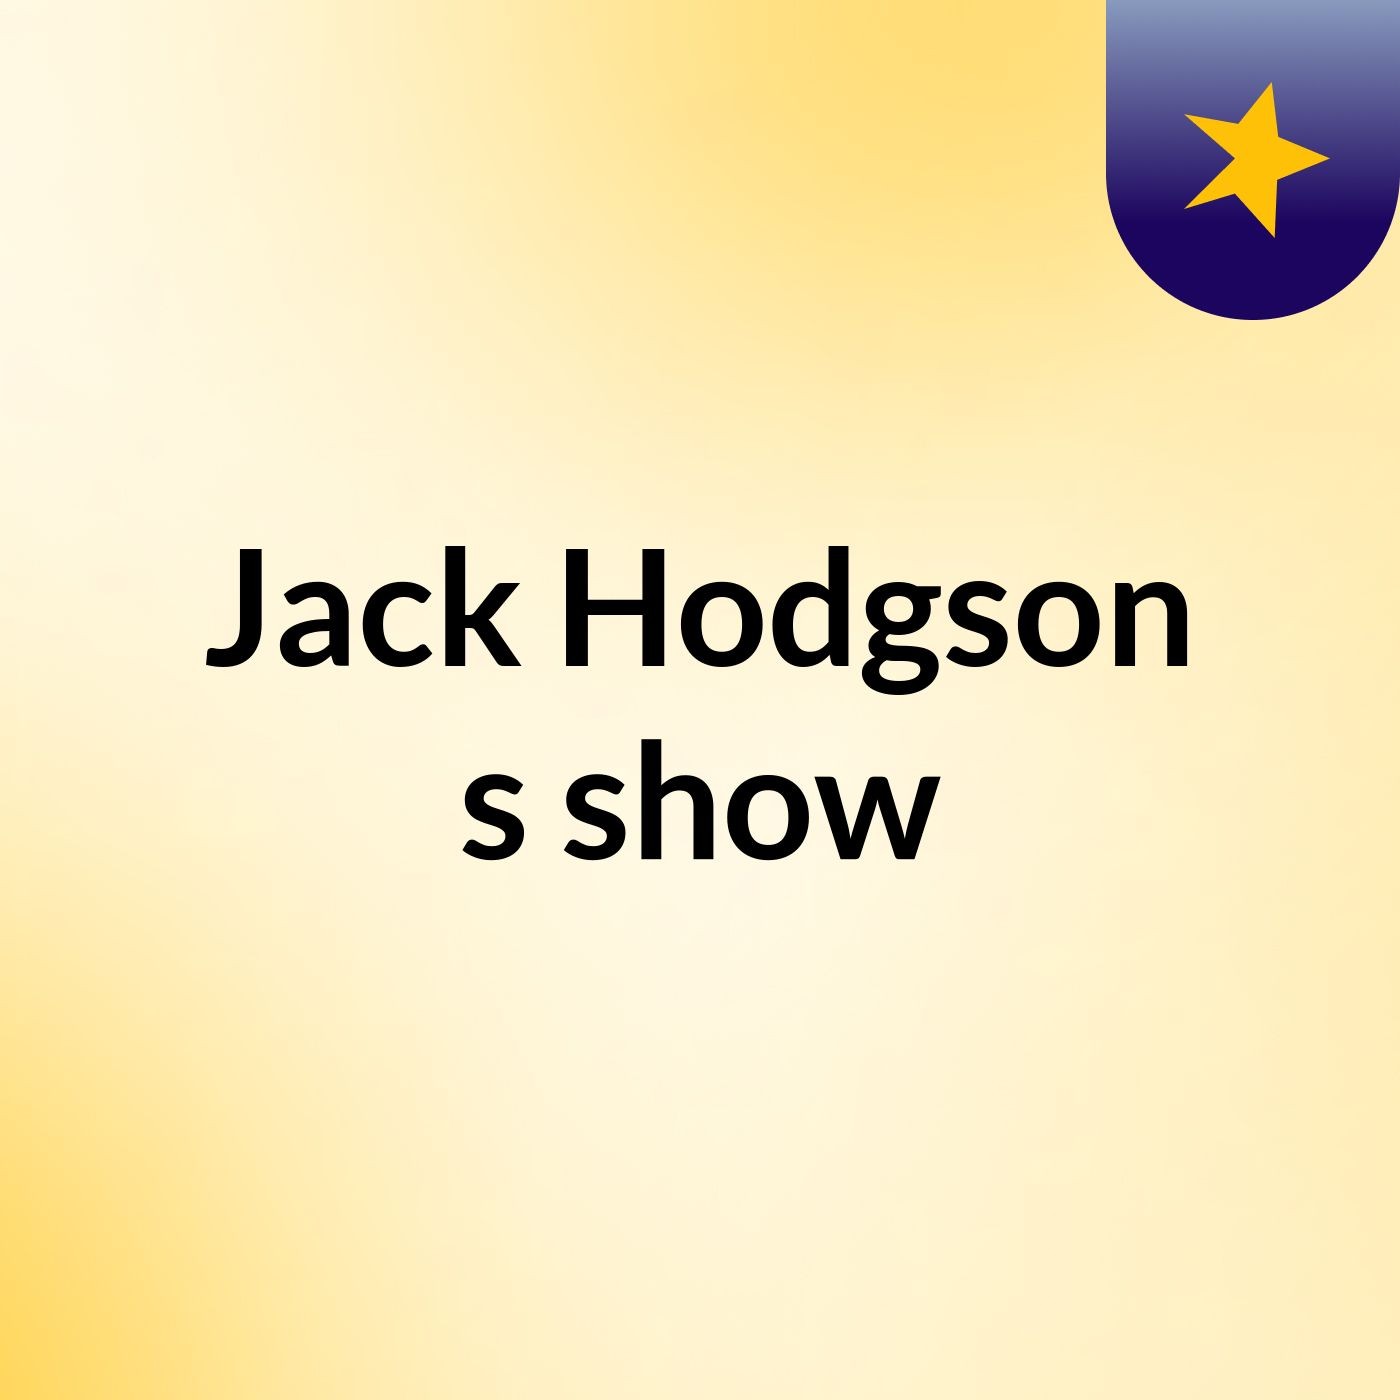 Jack Hodgson's show